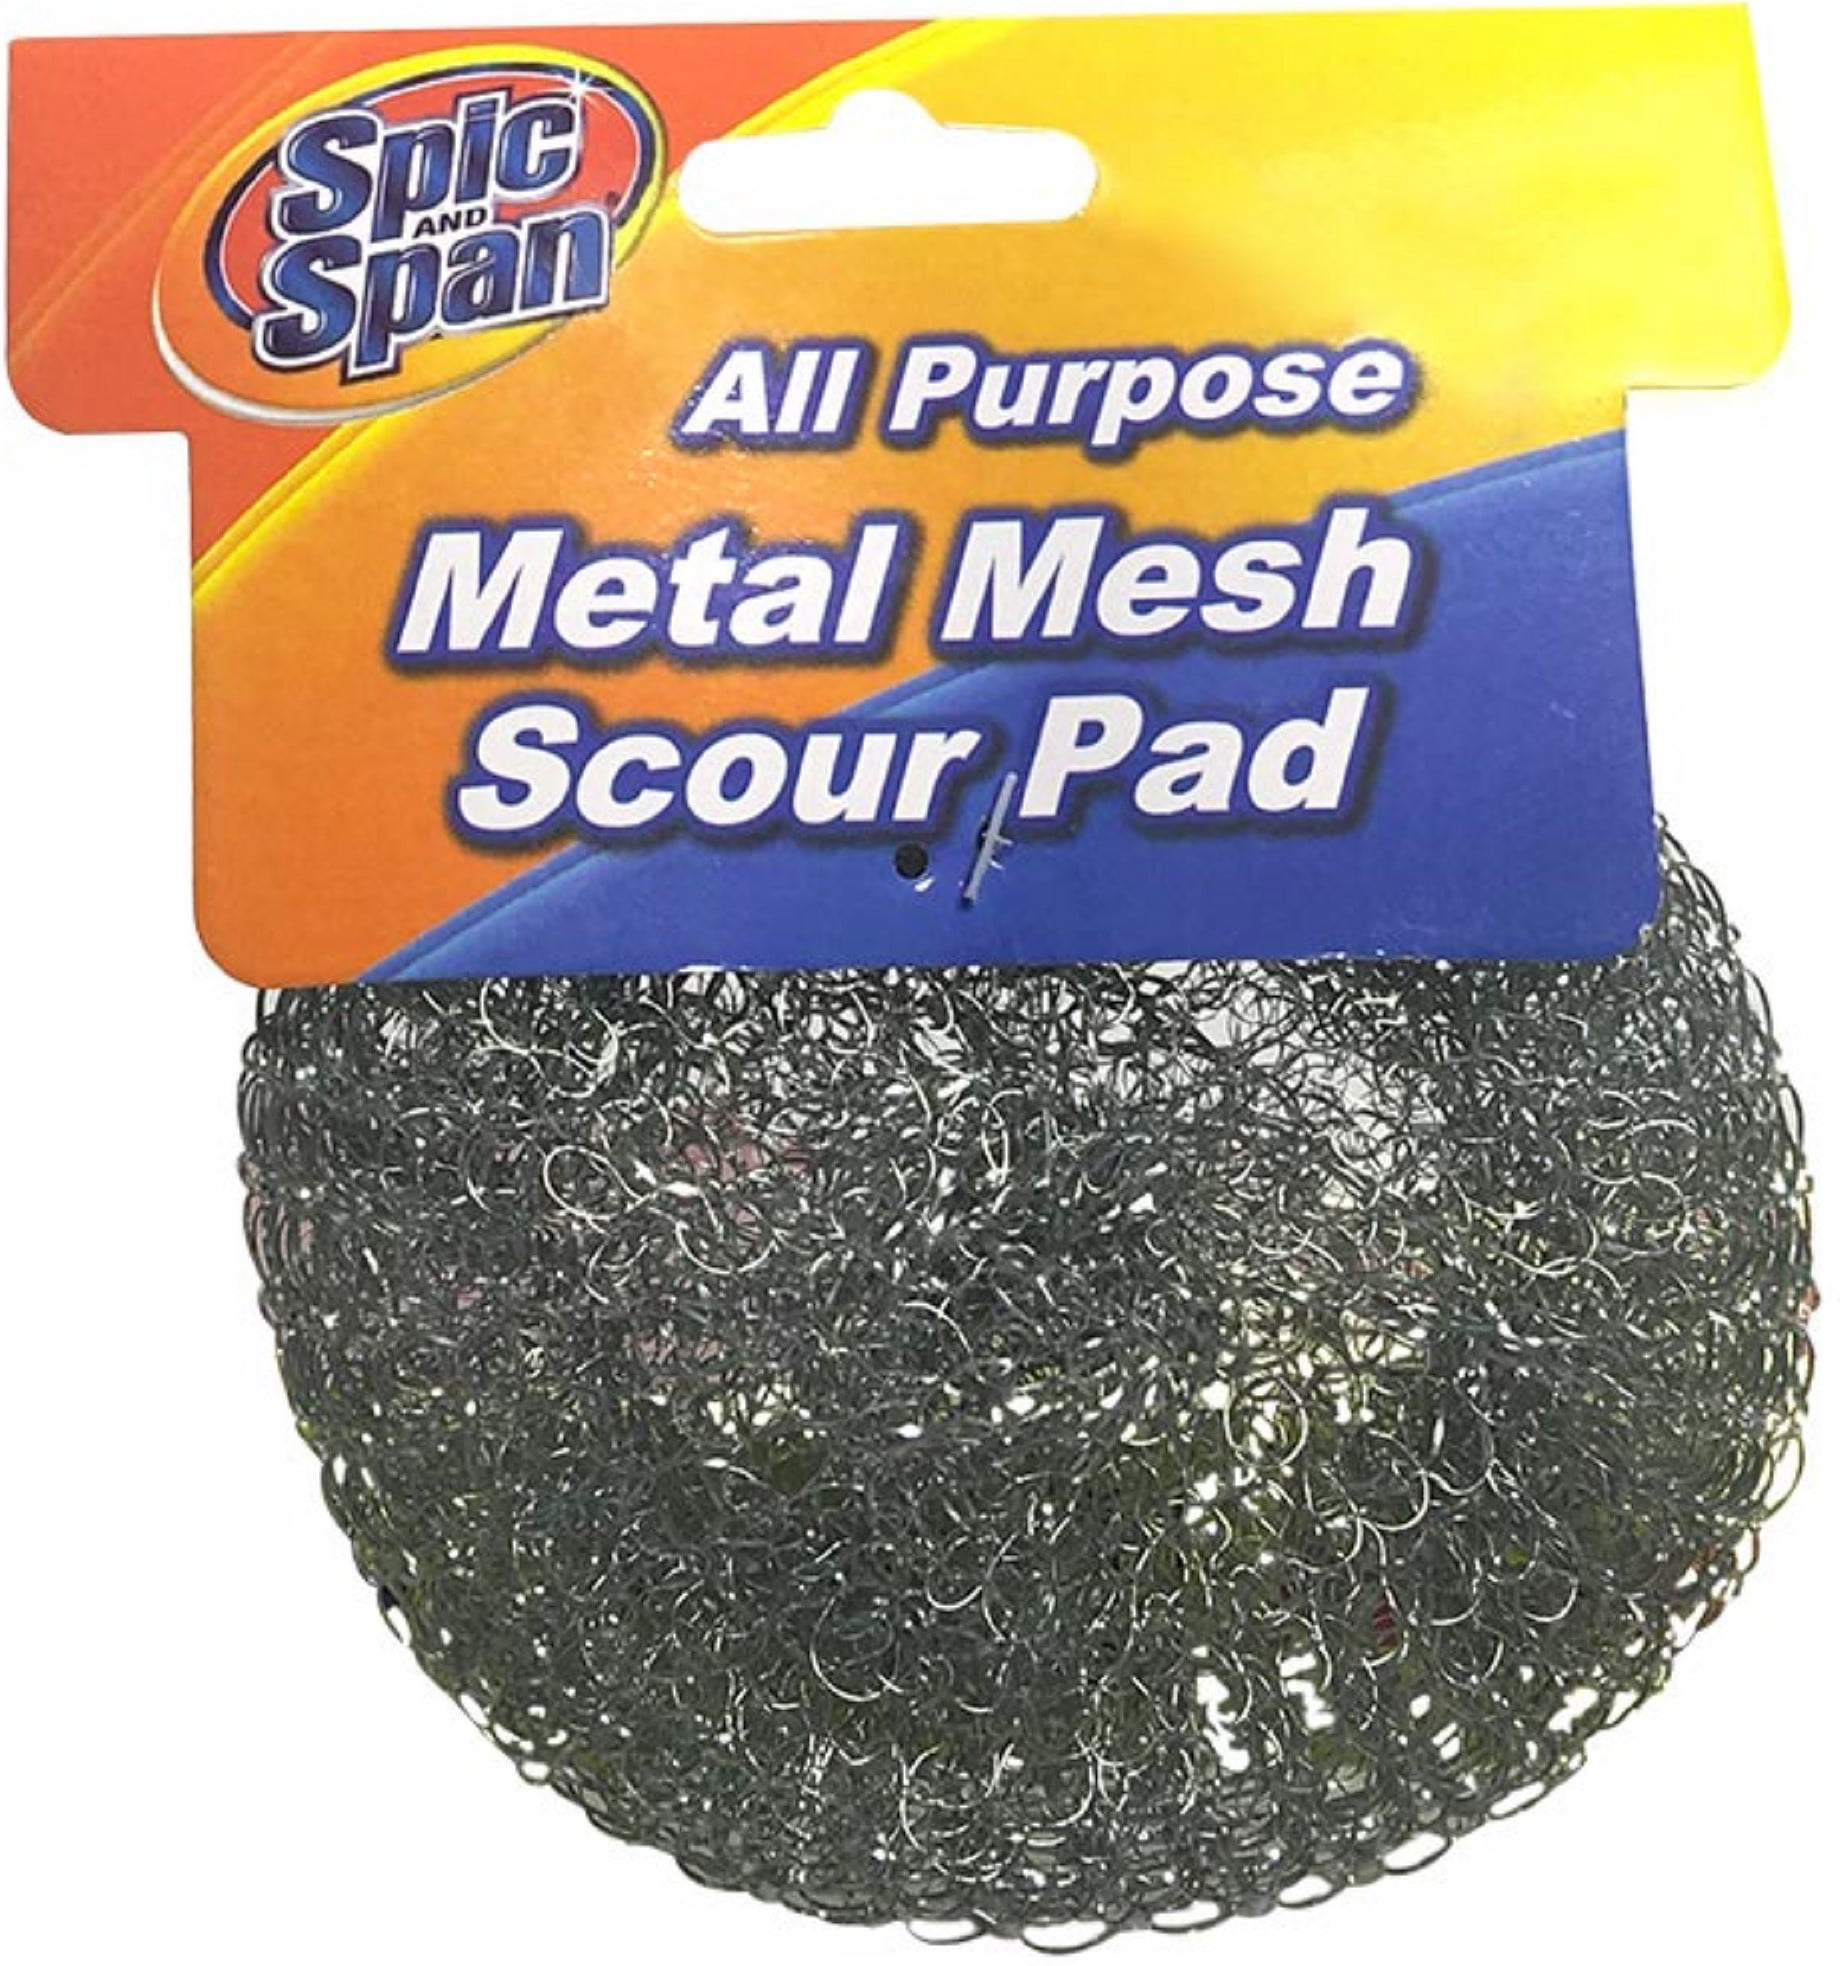 Spic and Span Microfiber set of 4-1 towel 1 mesh scour and 2 metallic scrub